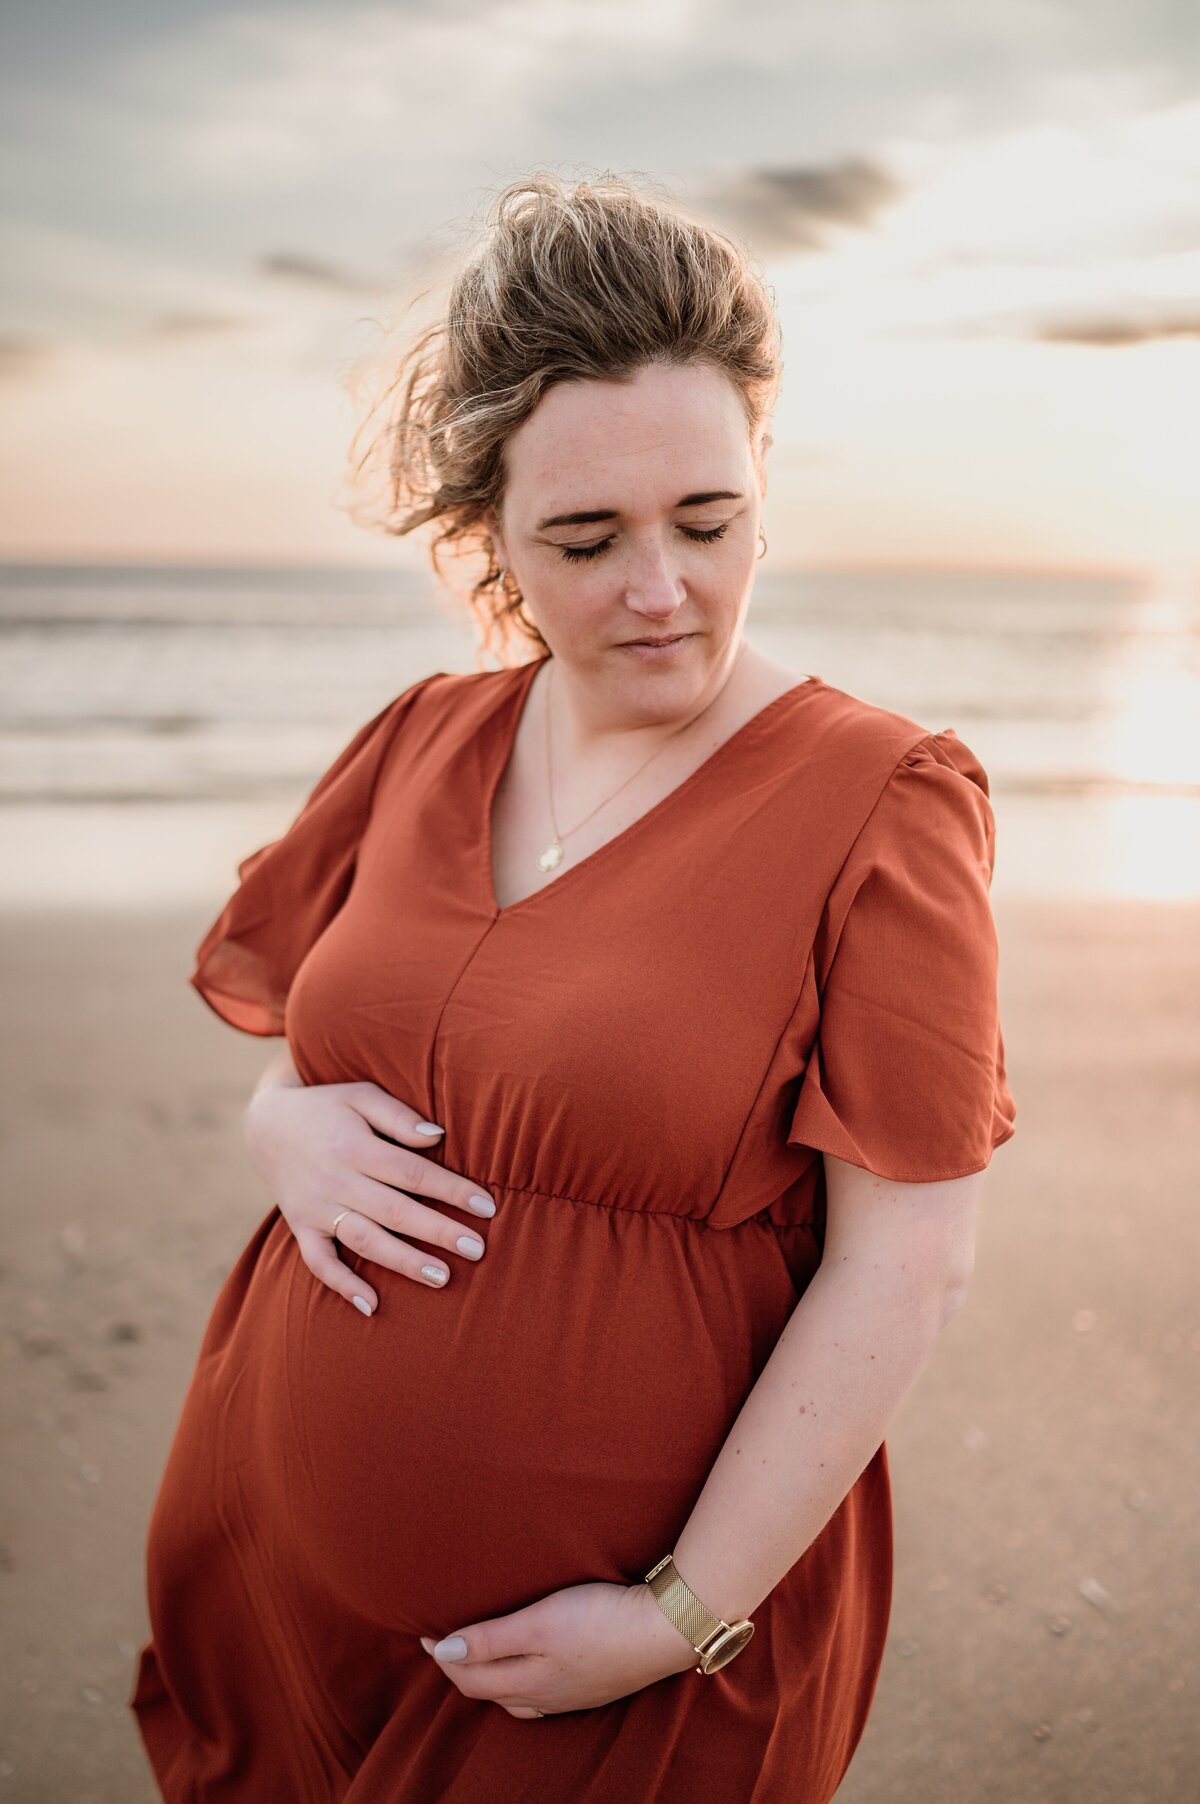 Fotografie bij Samantha-24 zwangerschap fotograaf velsen ijmuiden haarlem en omstreken zwangerschap, newborn fotograaf  (7)